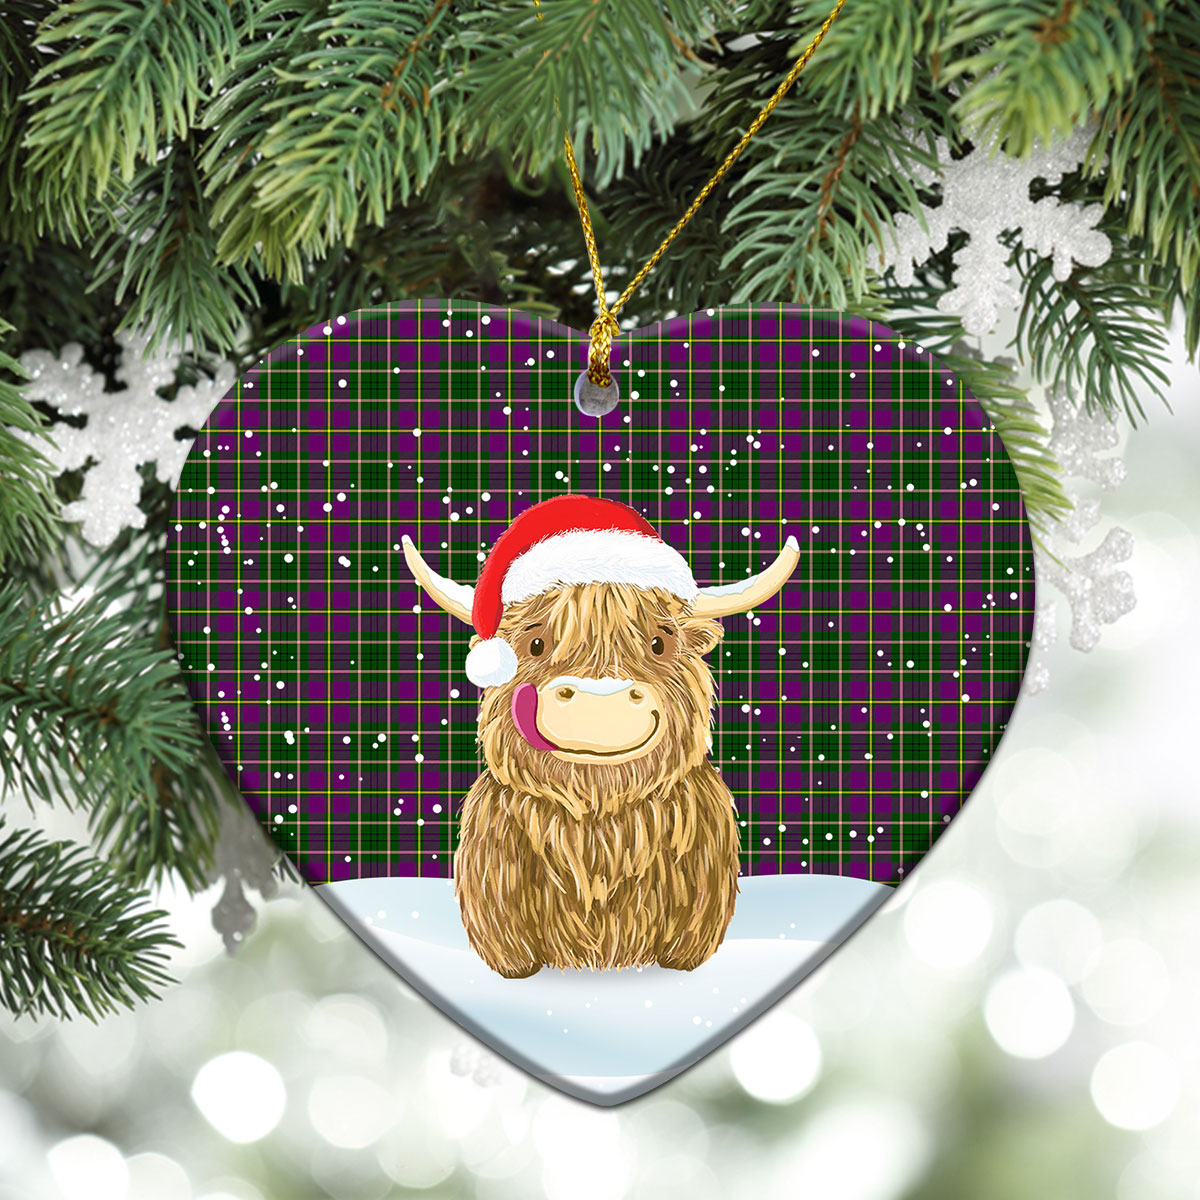 Tailyour Tartan Christmas Ceramic Ornament - Highland Cows Style